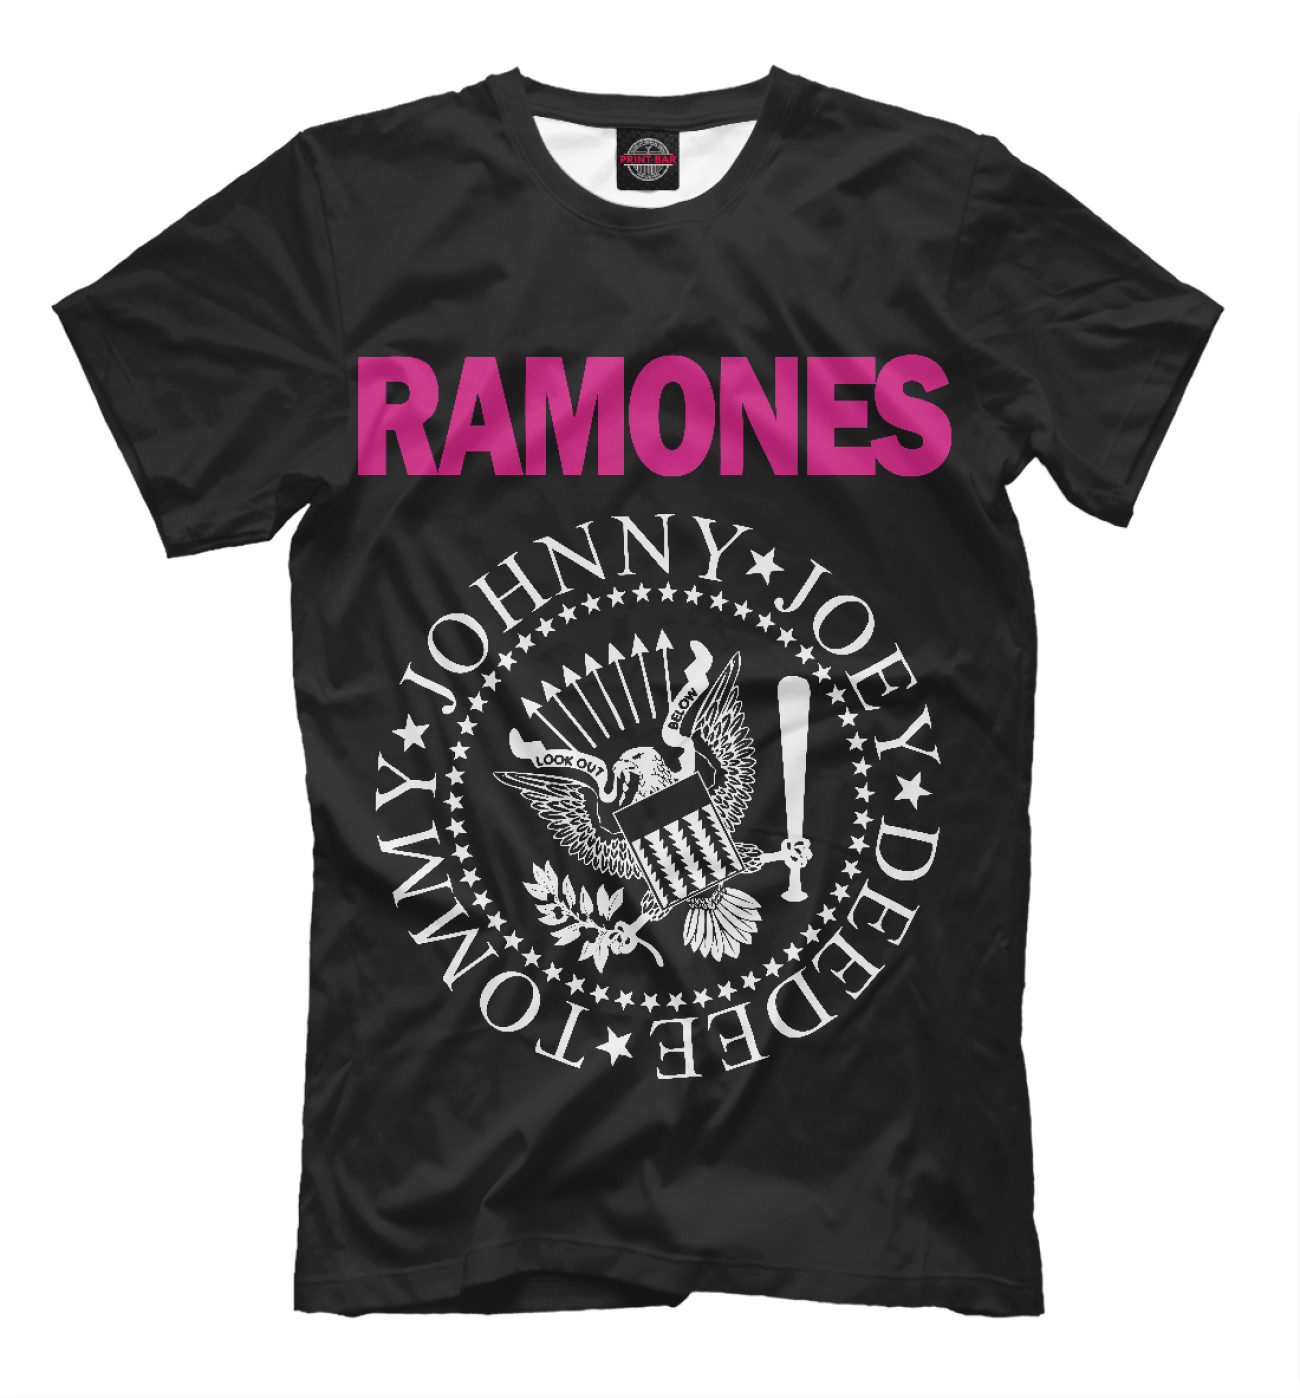 Мужская Футболка Ramones pink, артикул: MZK-626883-fut-2